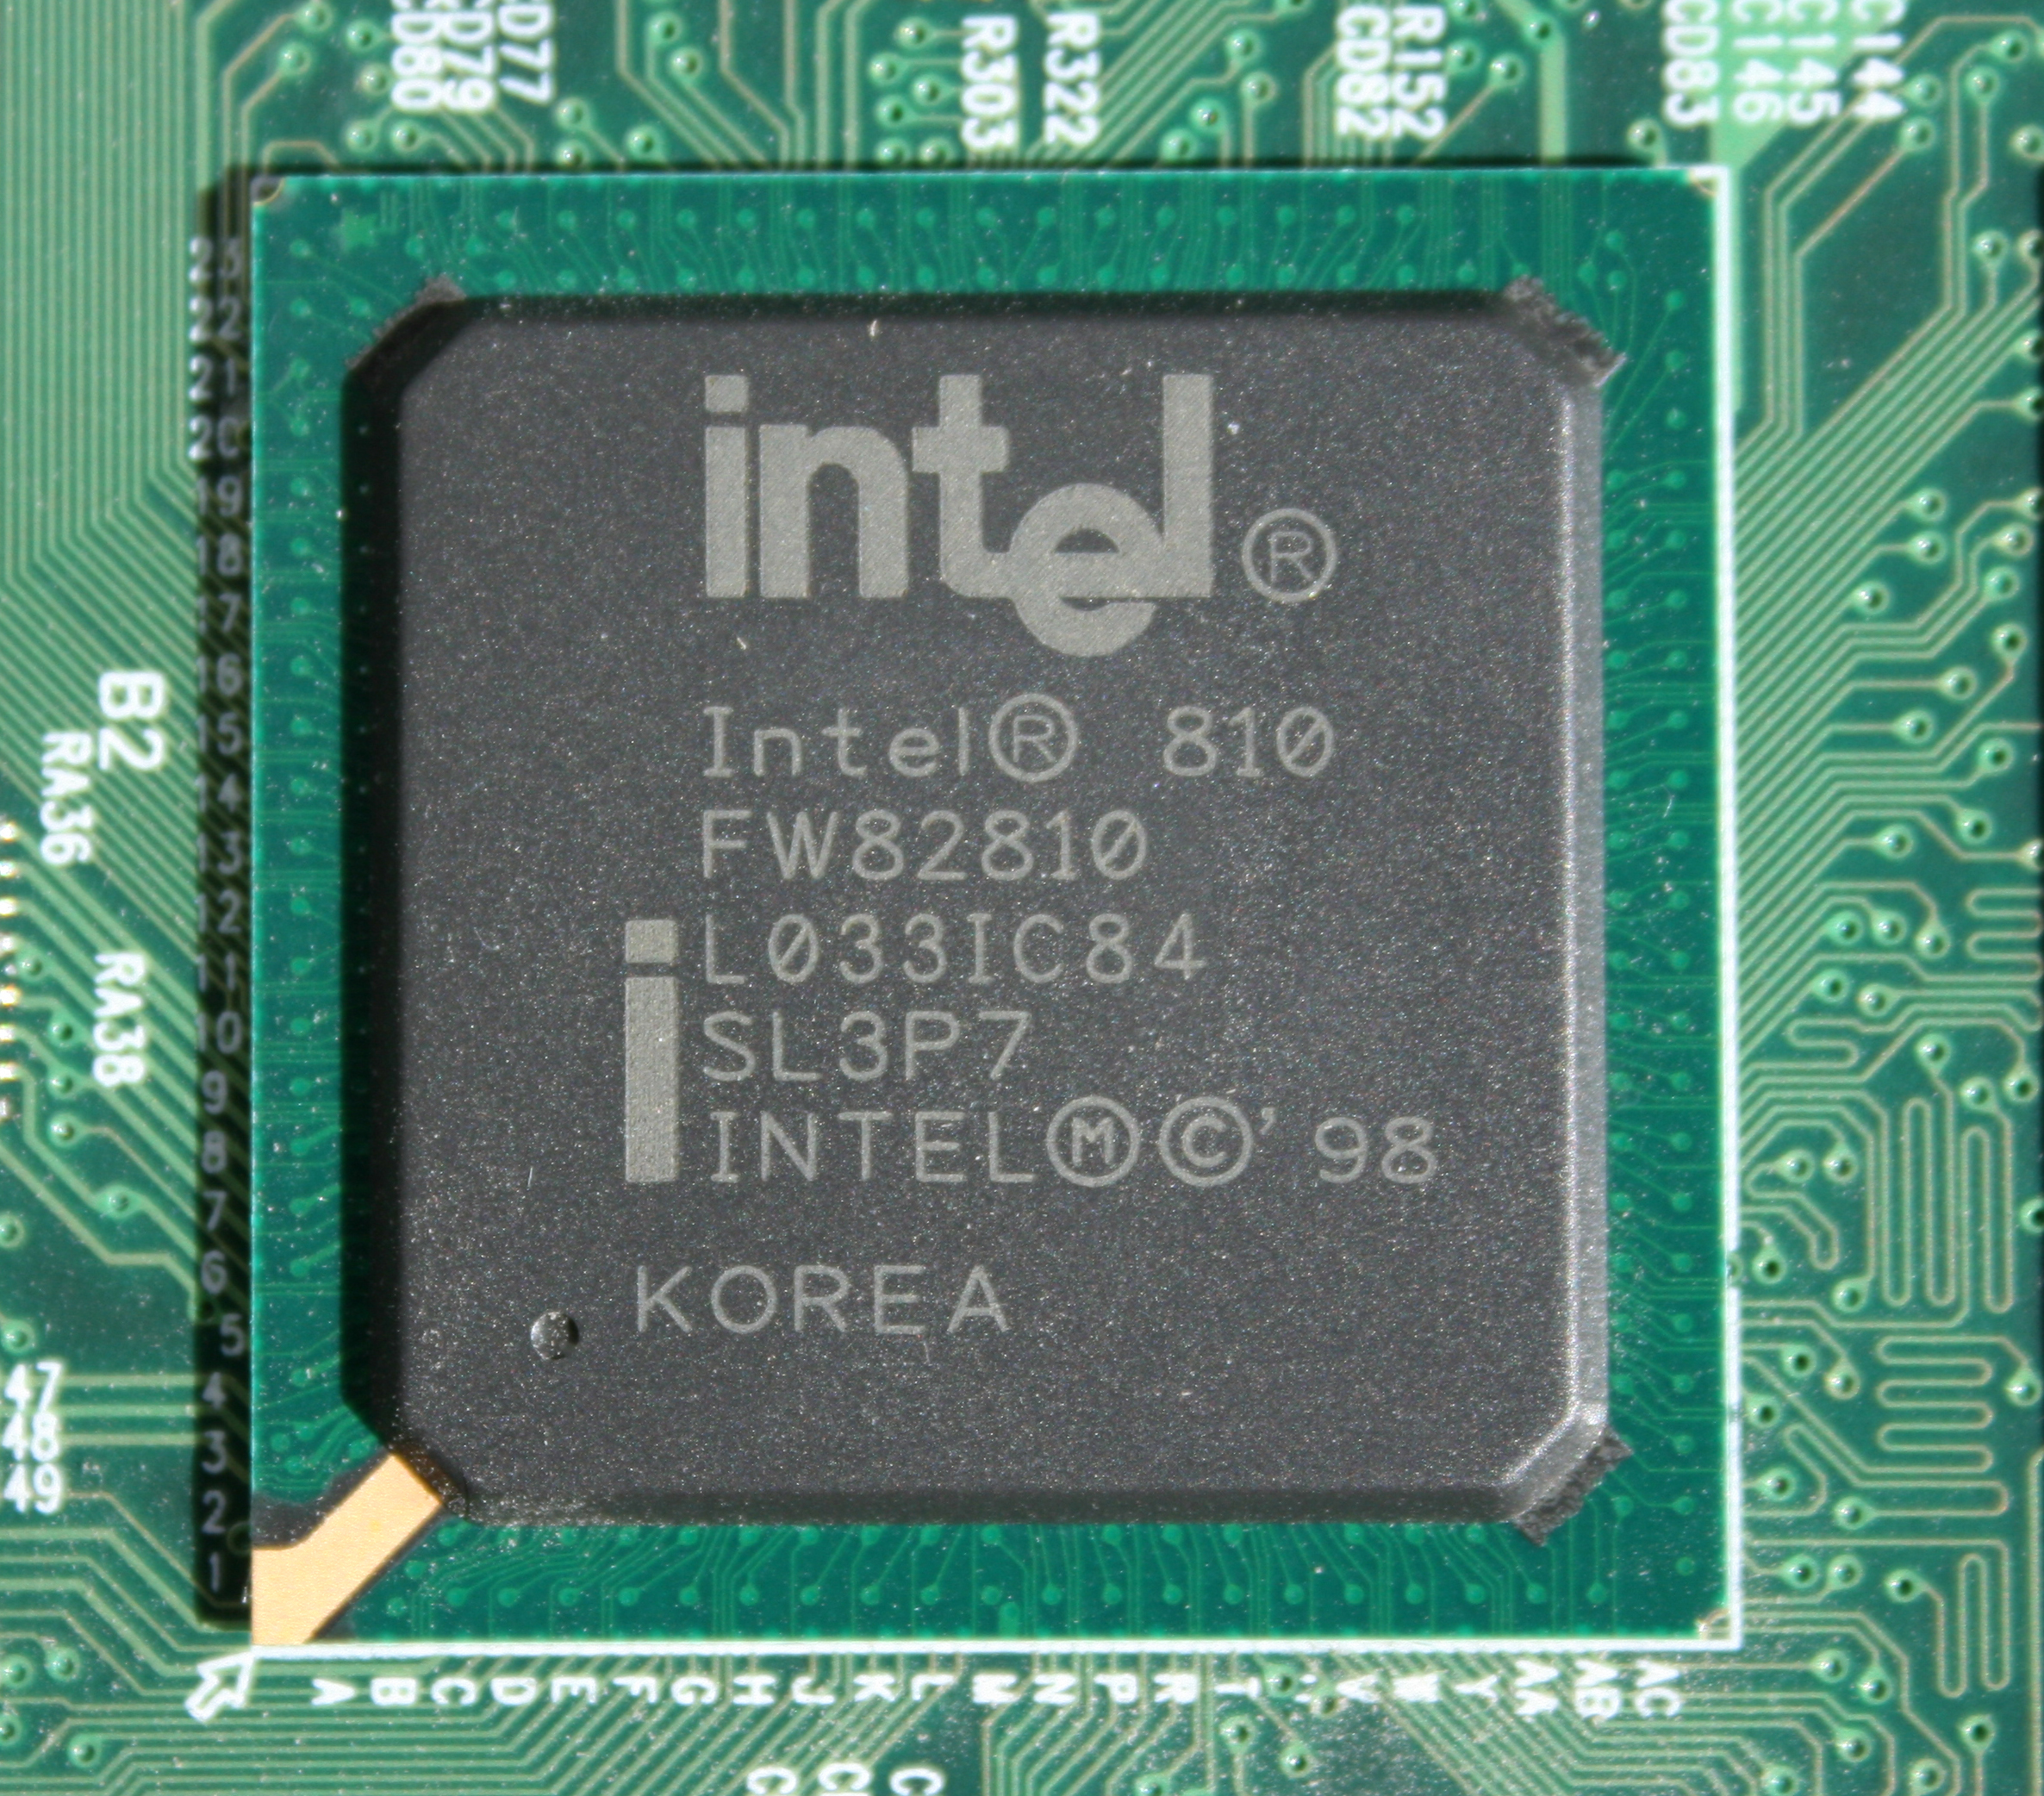 Intel int. Интел 310 чипсет. Intel Celeron чипсет. Intel i740. Intel 810.